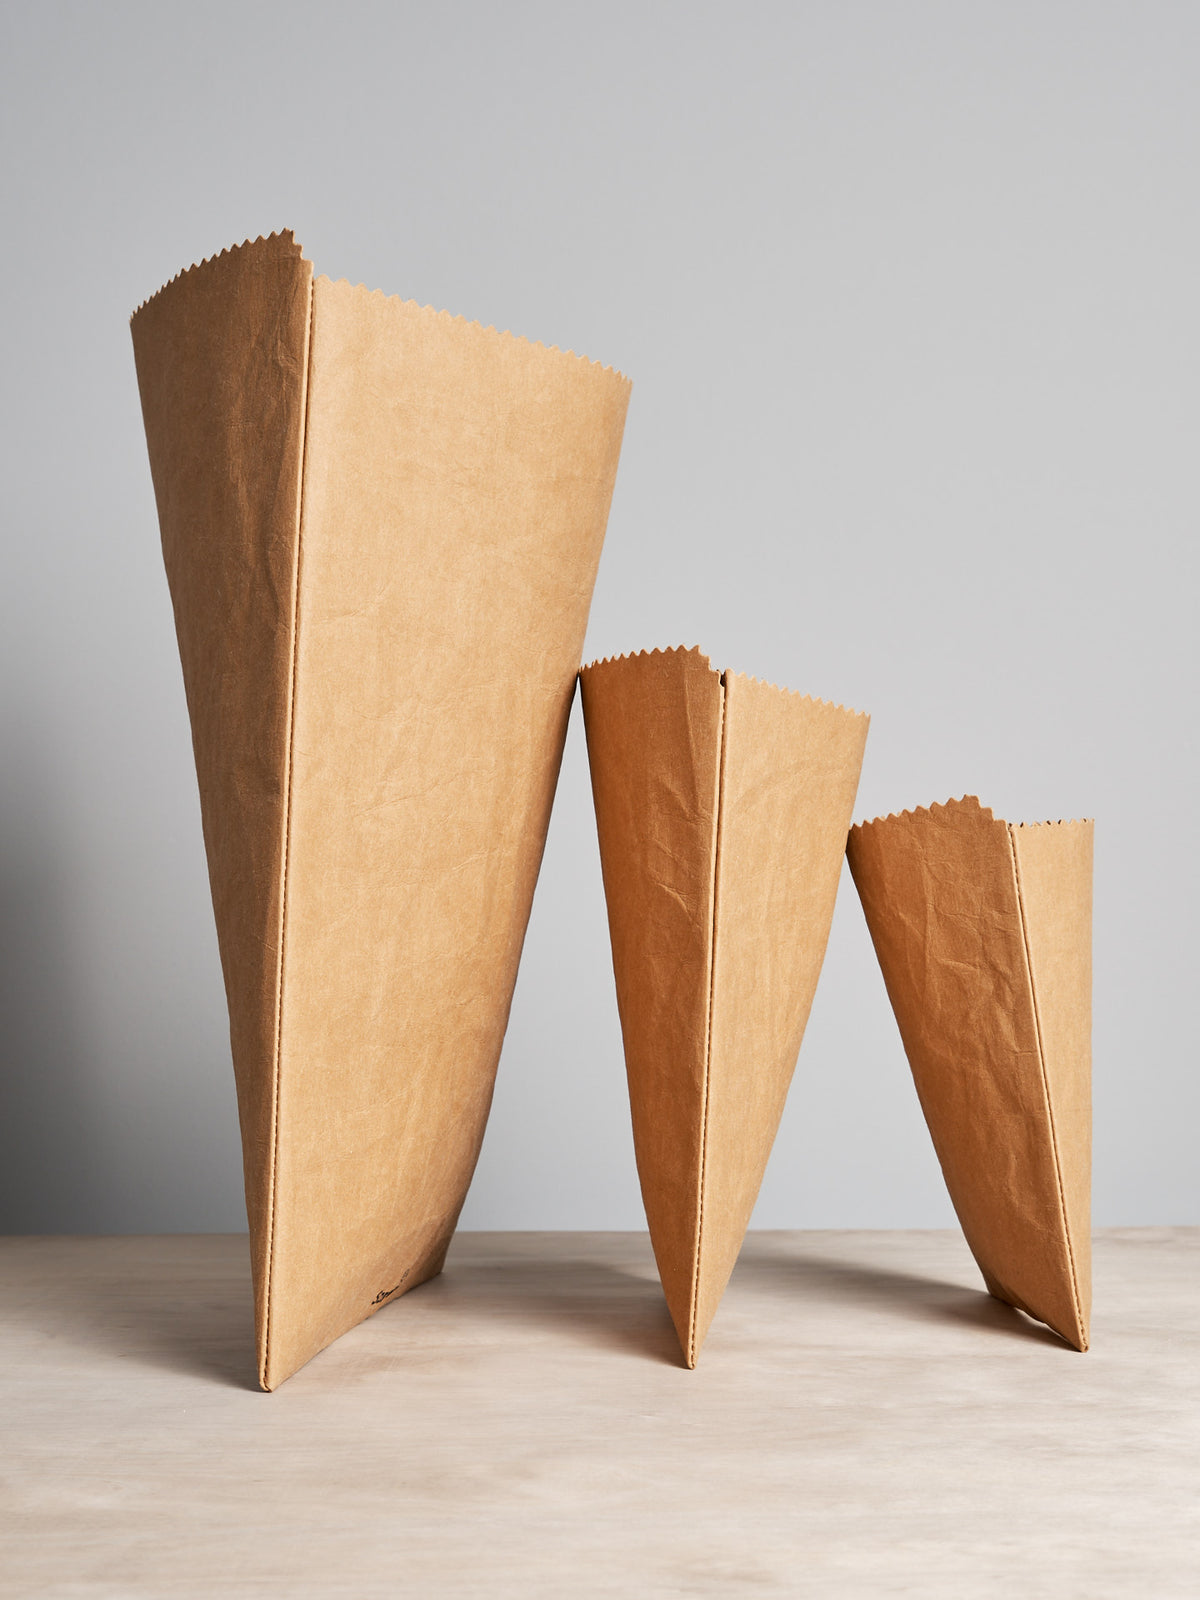 Three Sammy Bags reusable flat bags – medium on a wooden table.